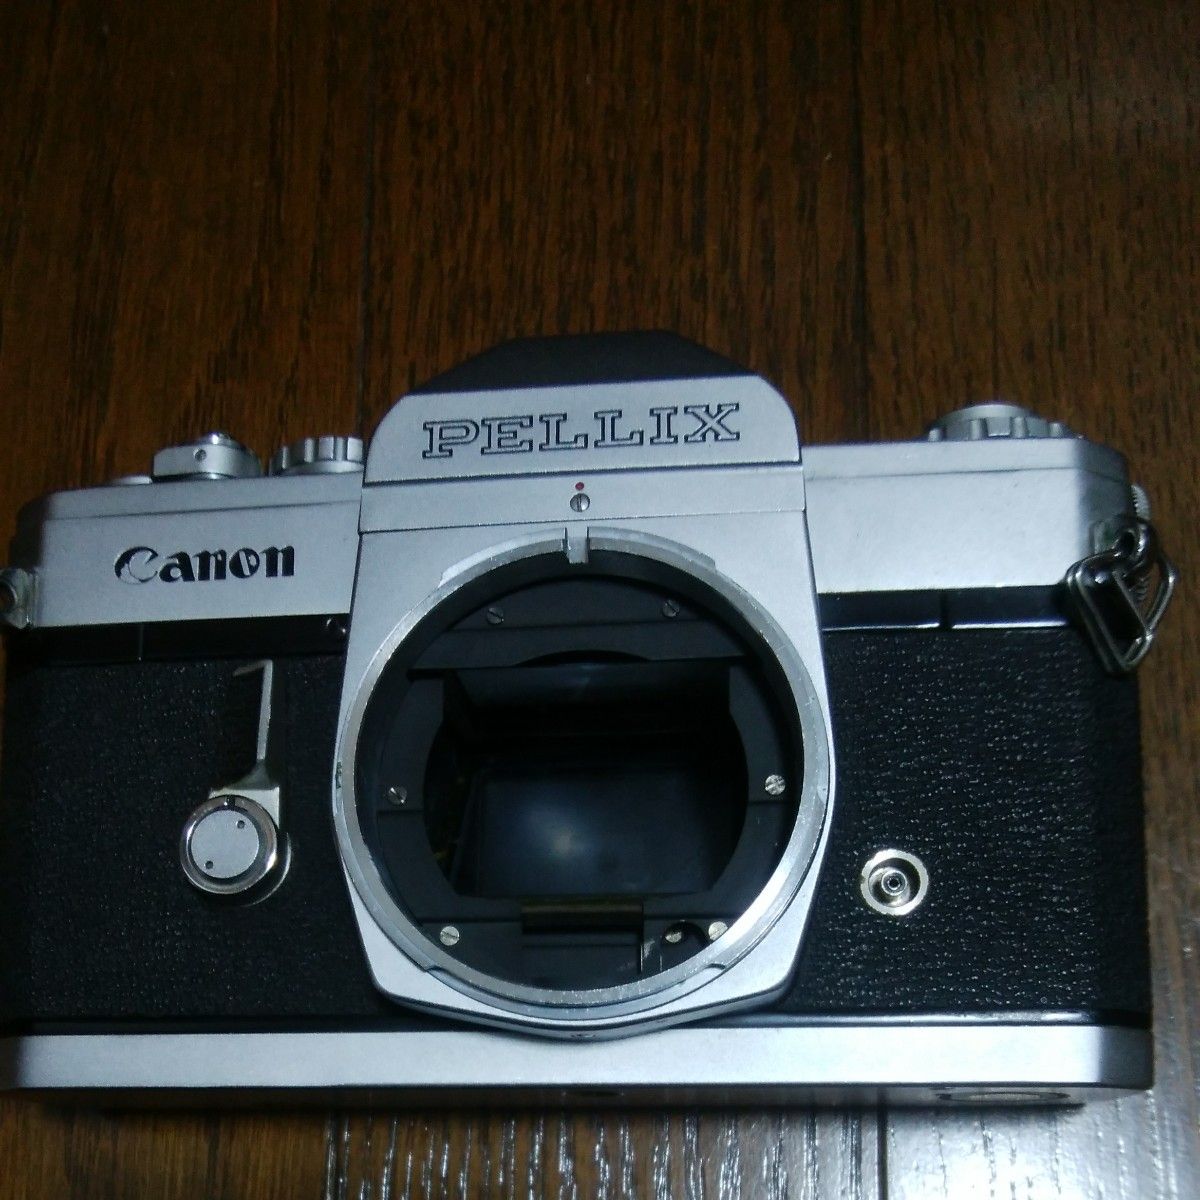 Canon PELLIX